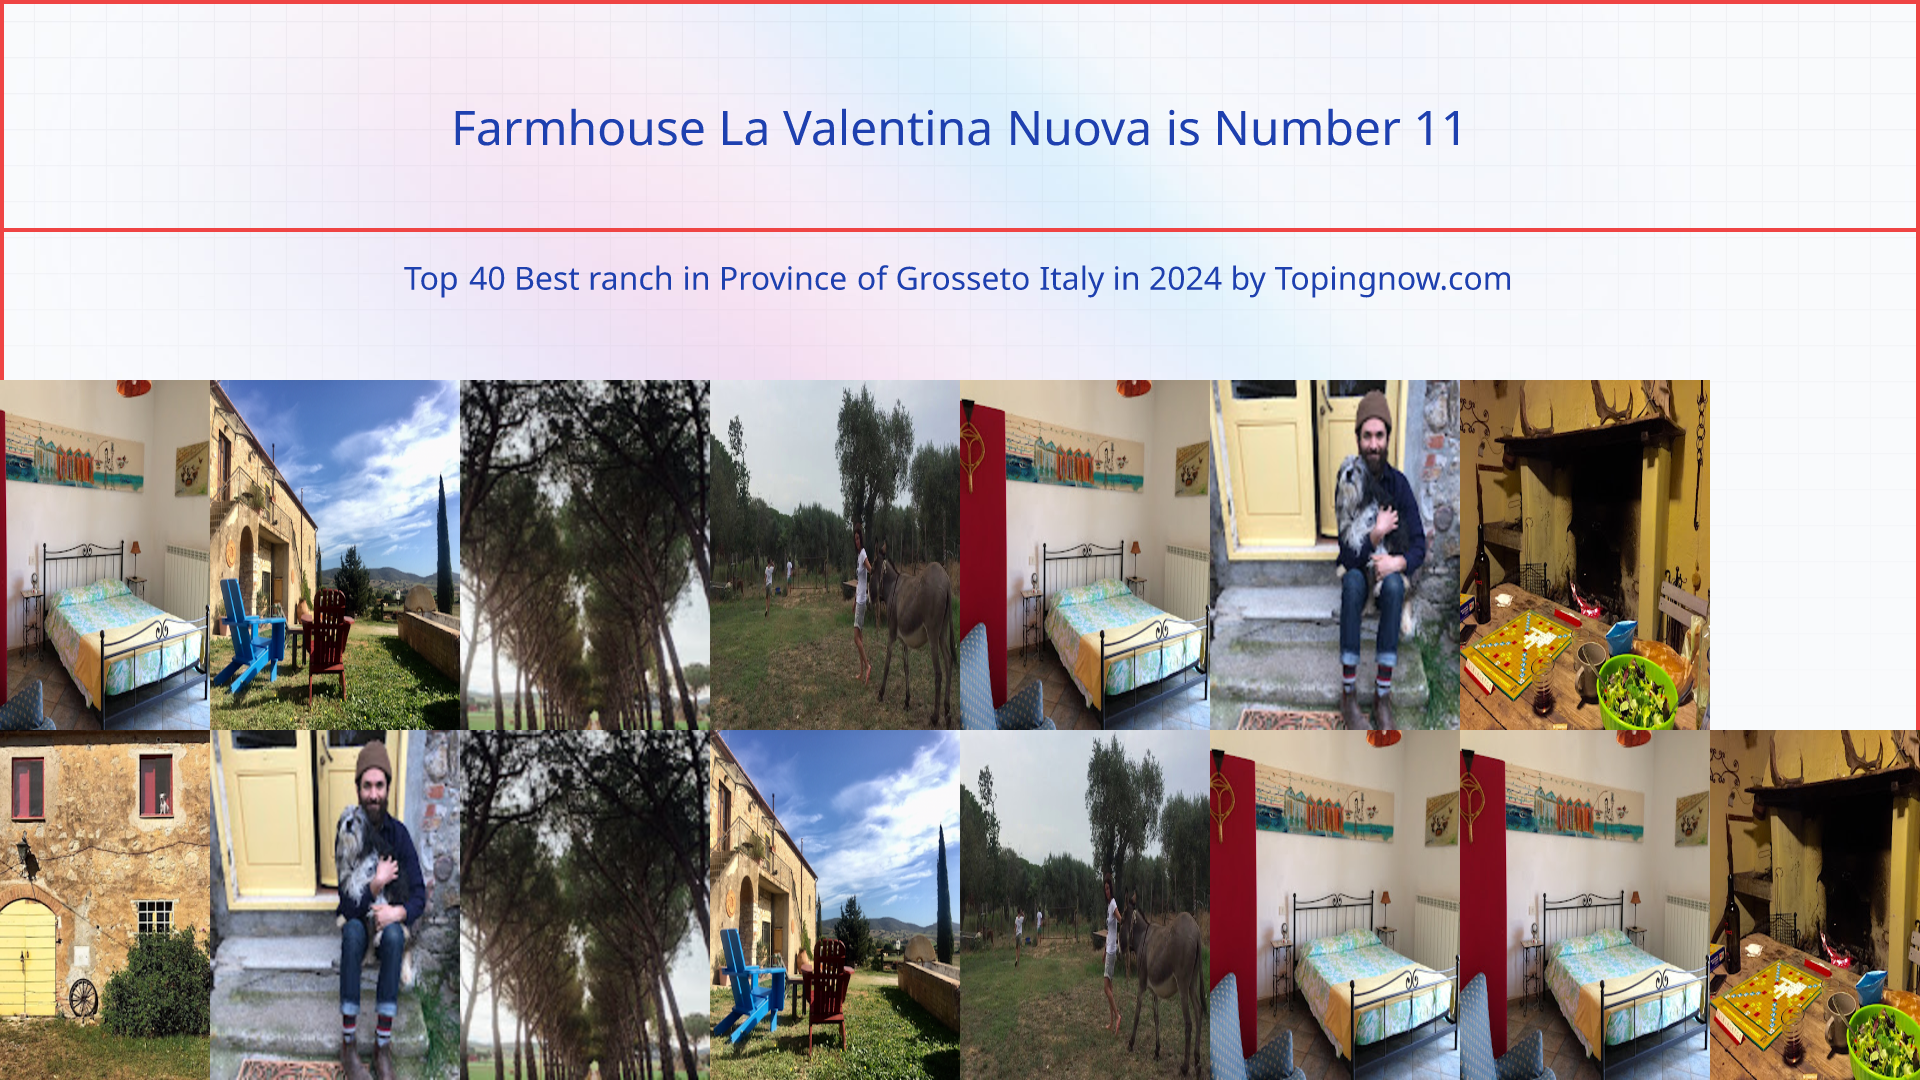 Farmhouse La Valentina Nuova: Top 40 Best ranch in Province of Grosseto Italy in 2024